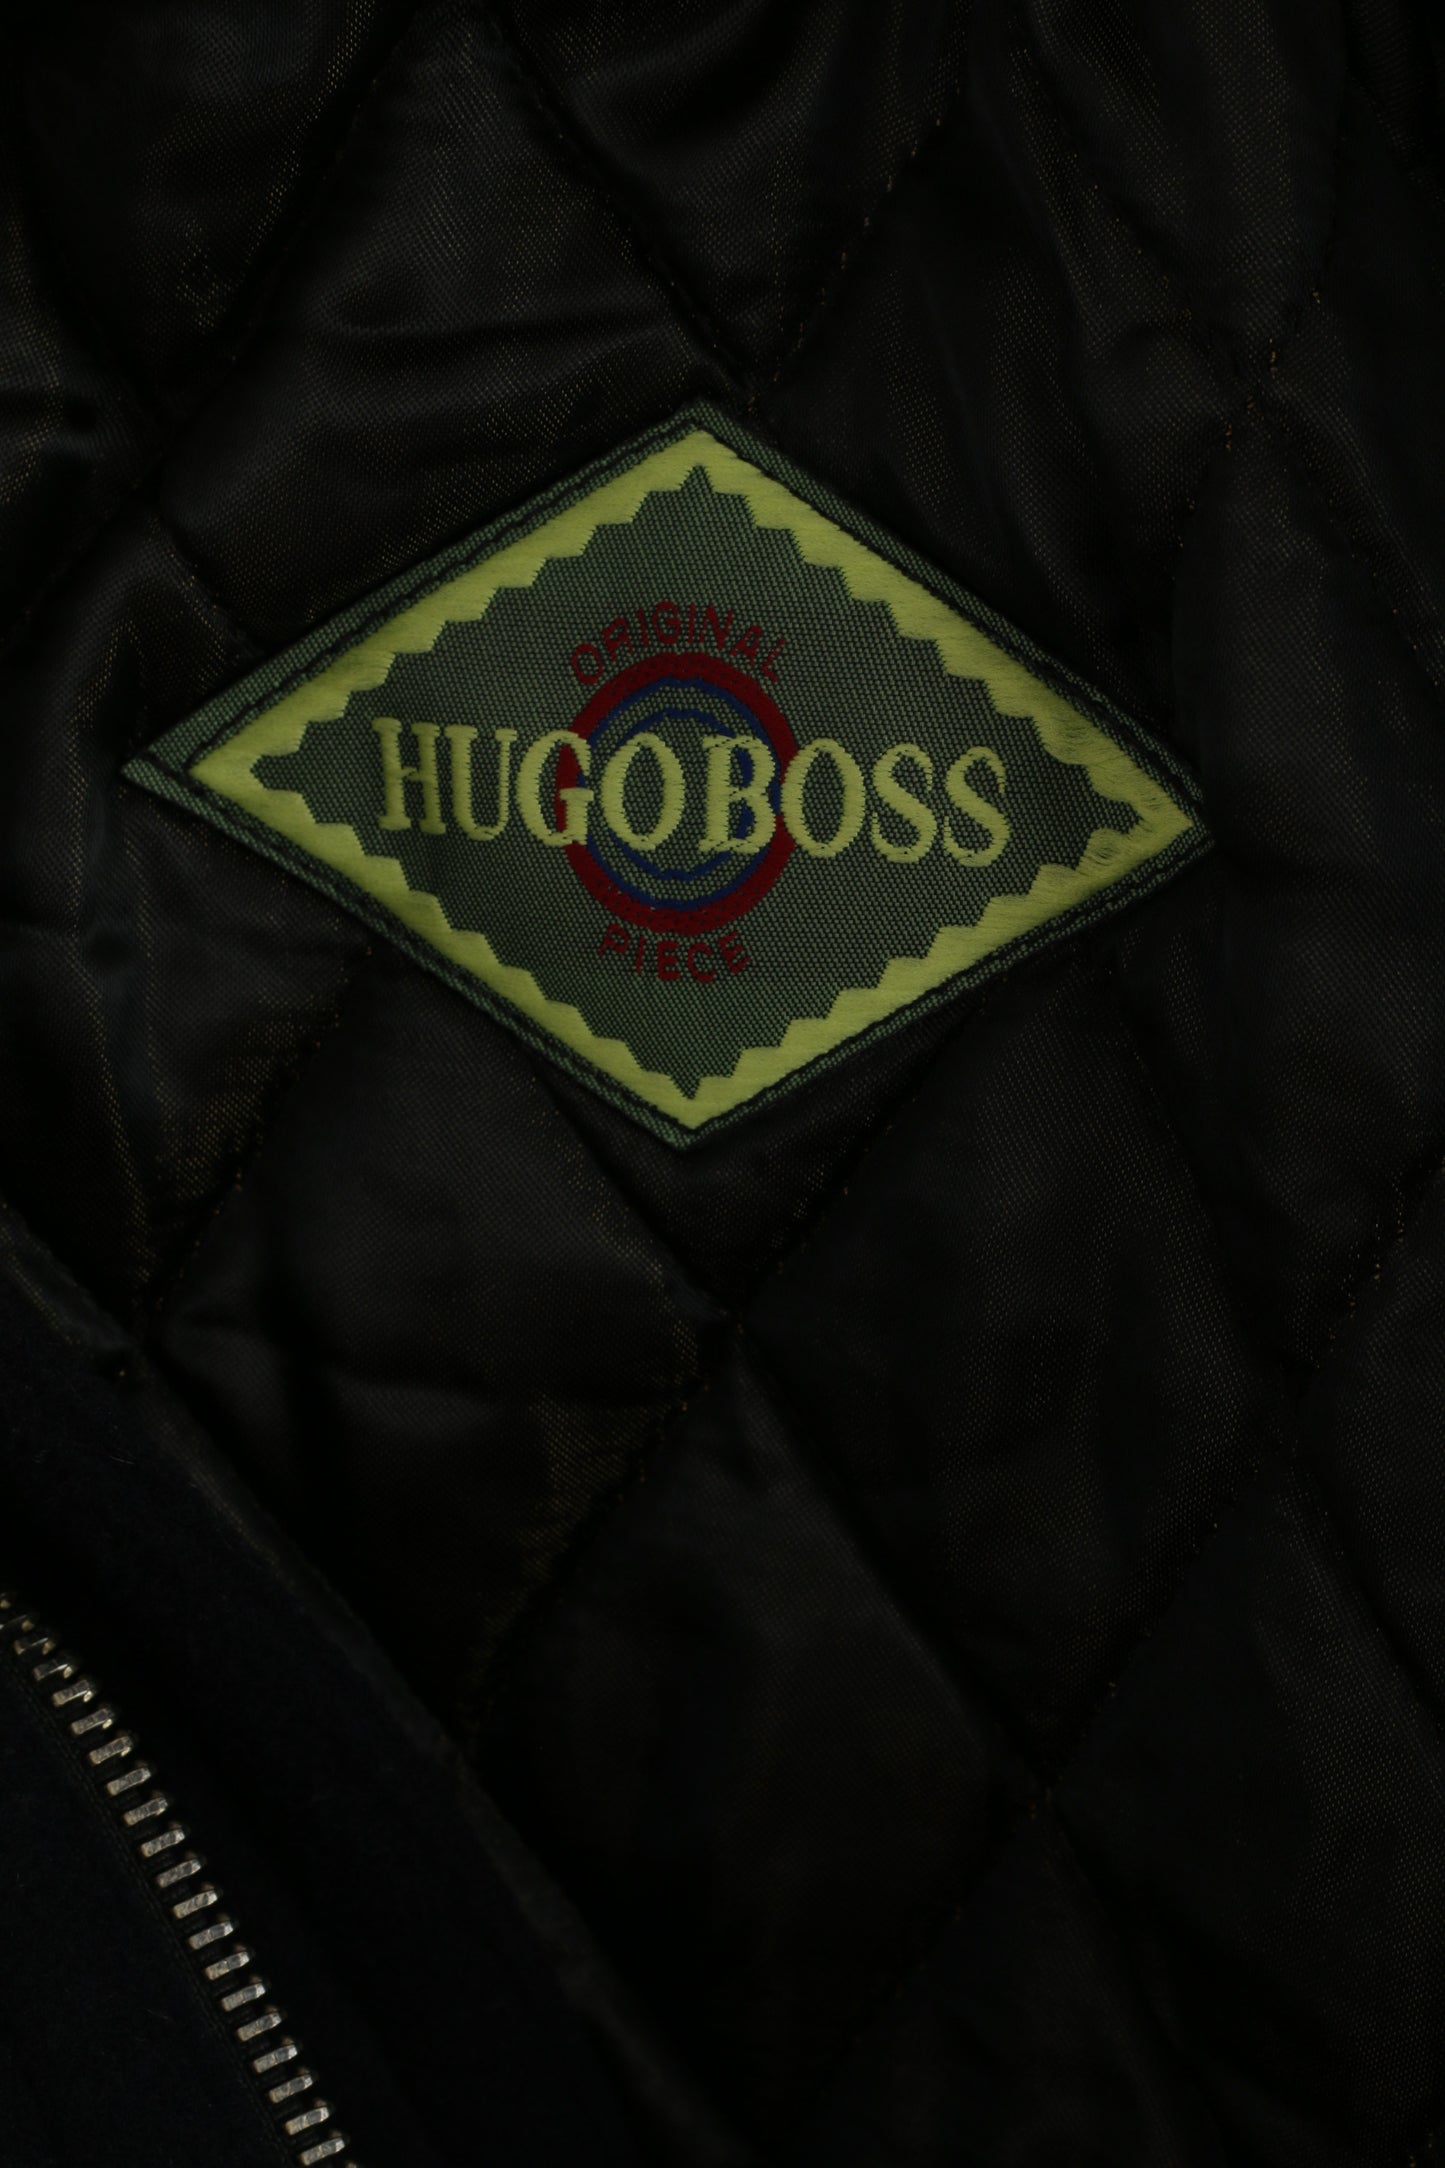 Hugo Boss Men 54 XL Jacket Navy Wool Cashmere Blend Vintage Made in Italy Coat